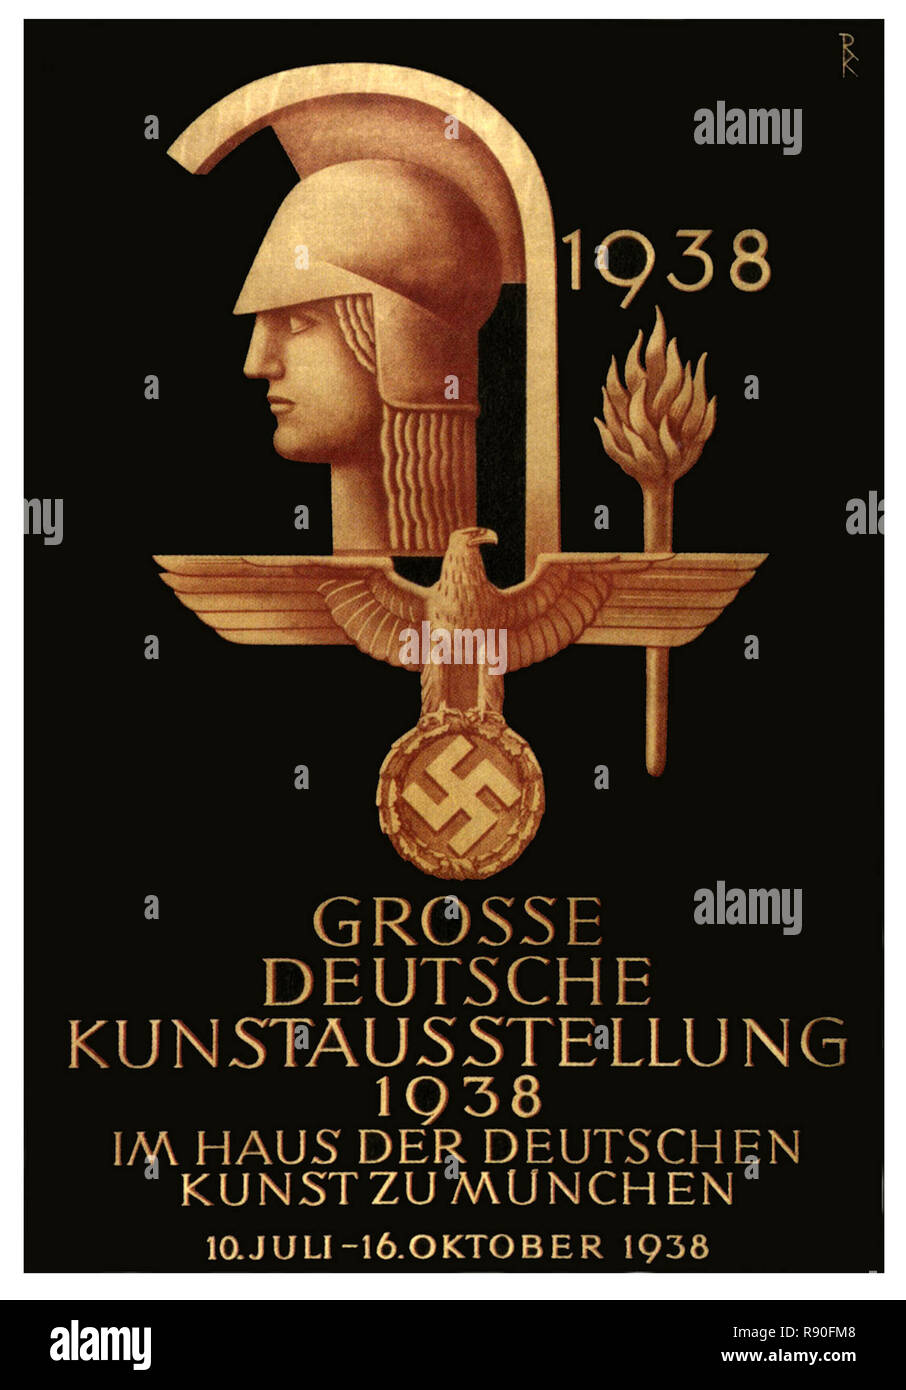 Great German Art Exhibit 1938 - Vintage German Nazi Propaganda Poster Stock Photo